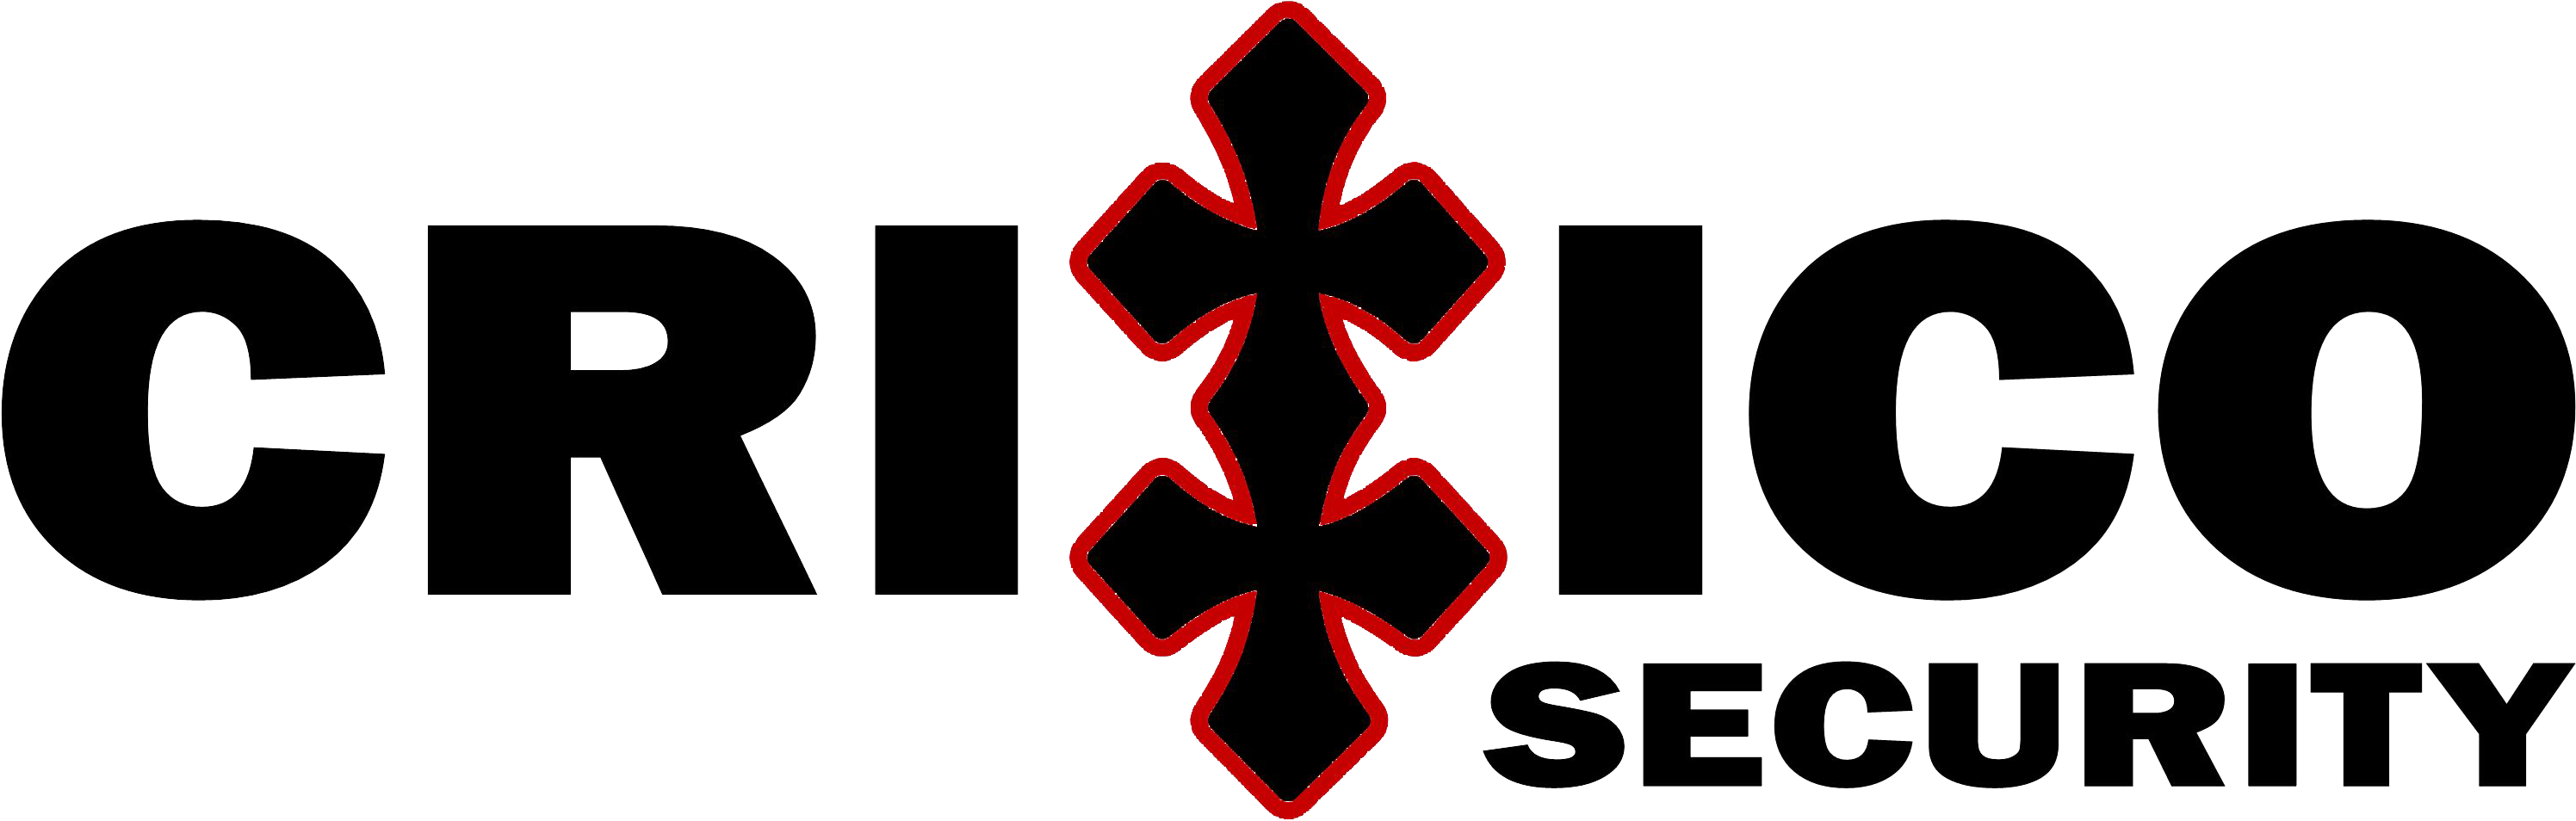 logo for Critico Security LTD